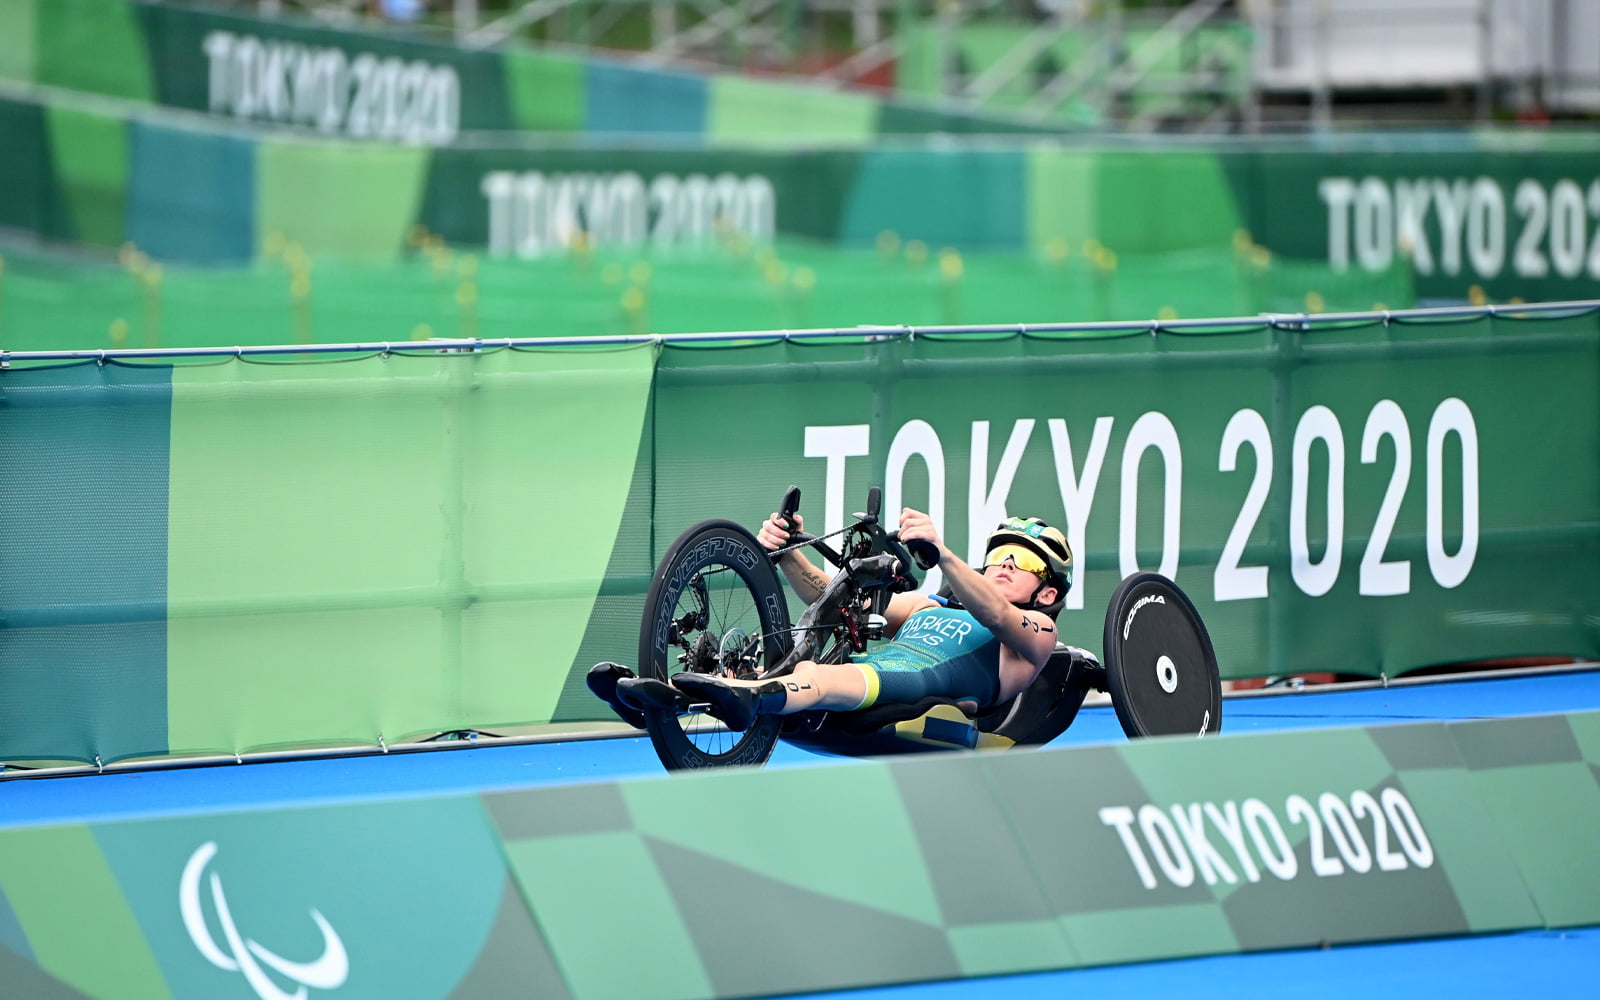 Australian Paralympian Lauren Parker riding in Para-triathlon at Tokyo 2020